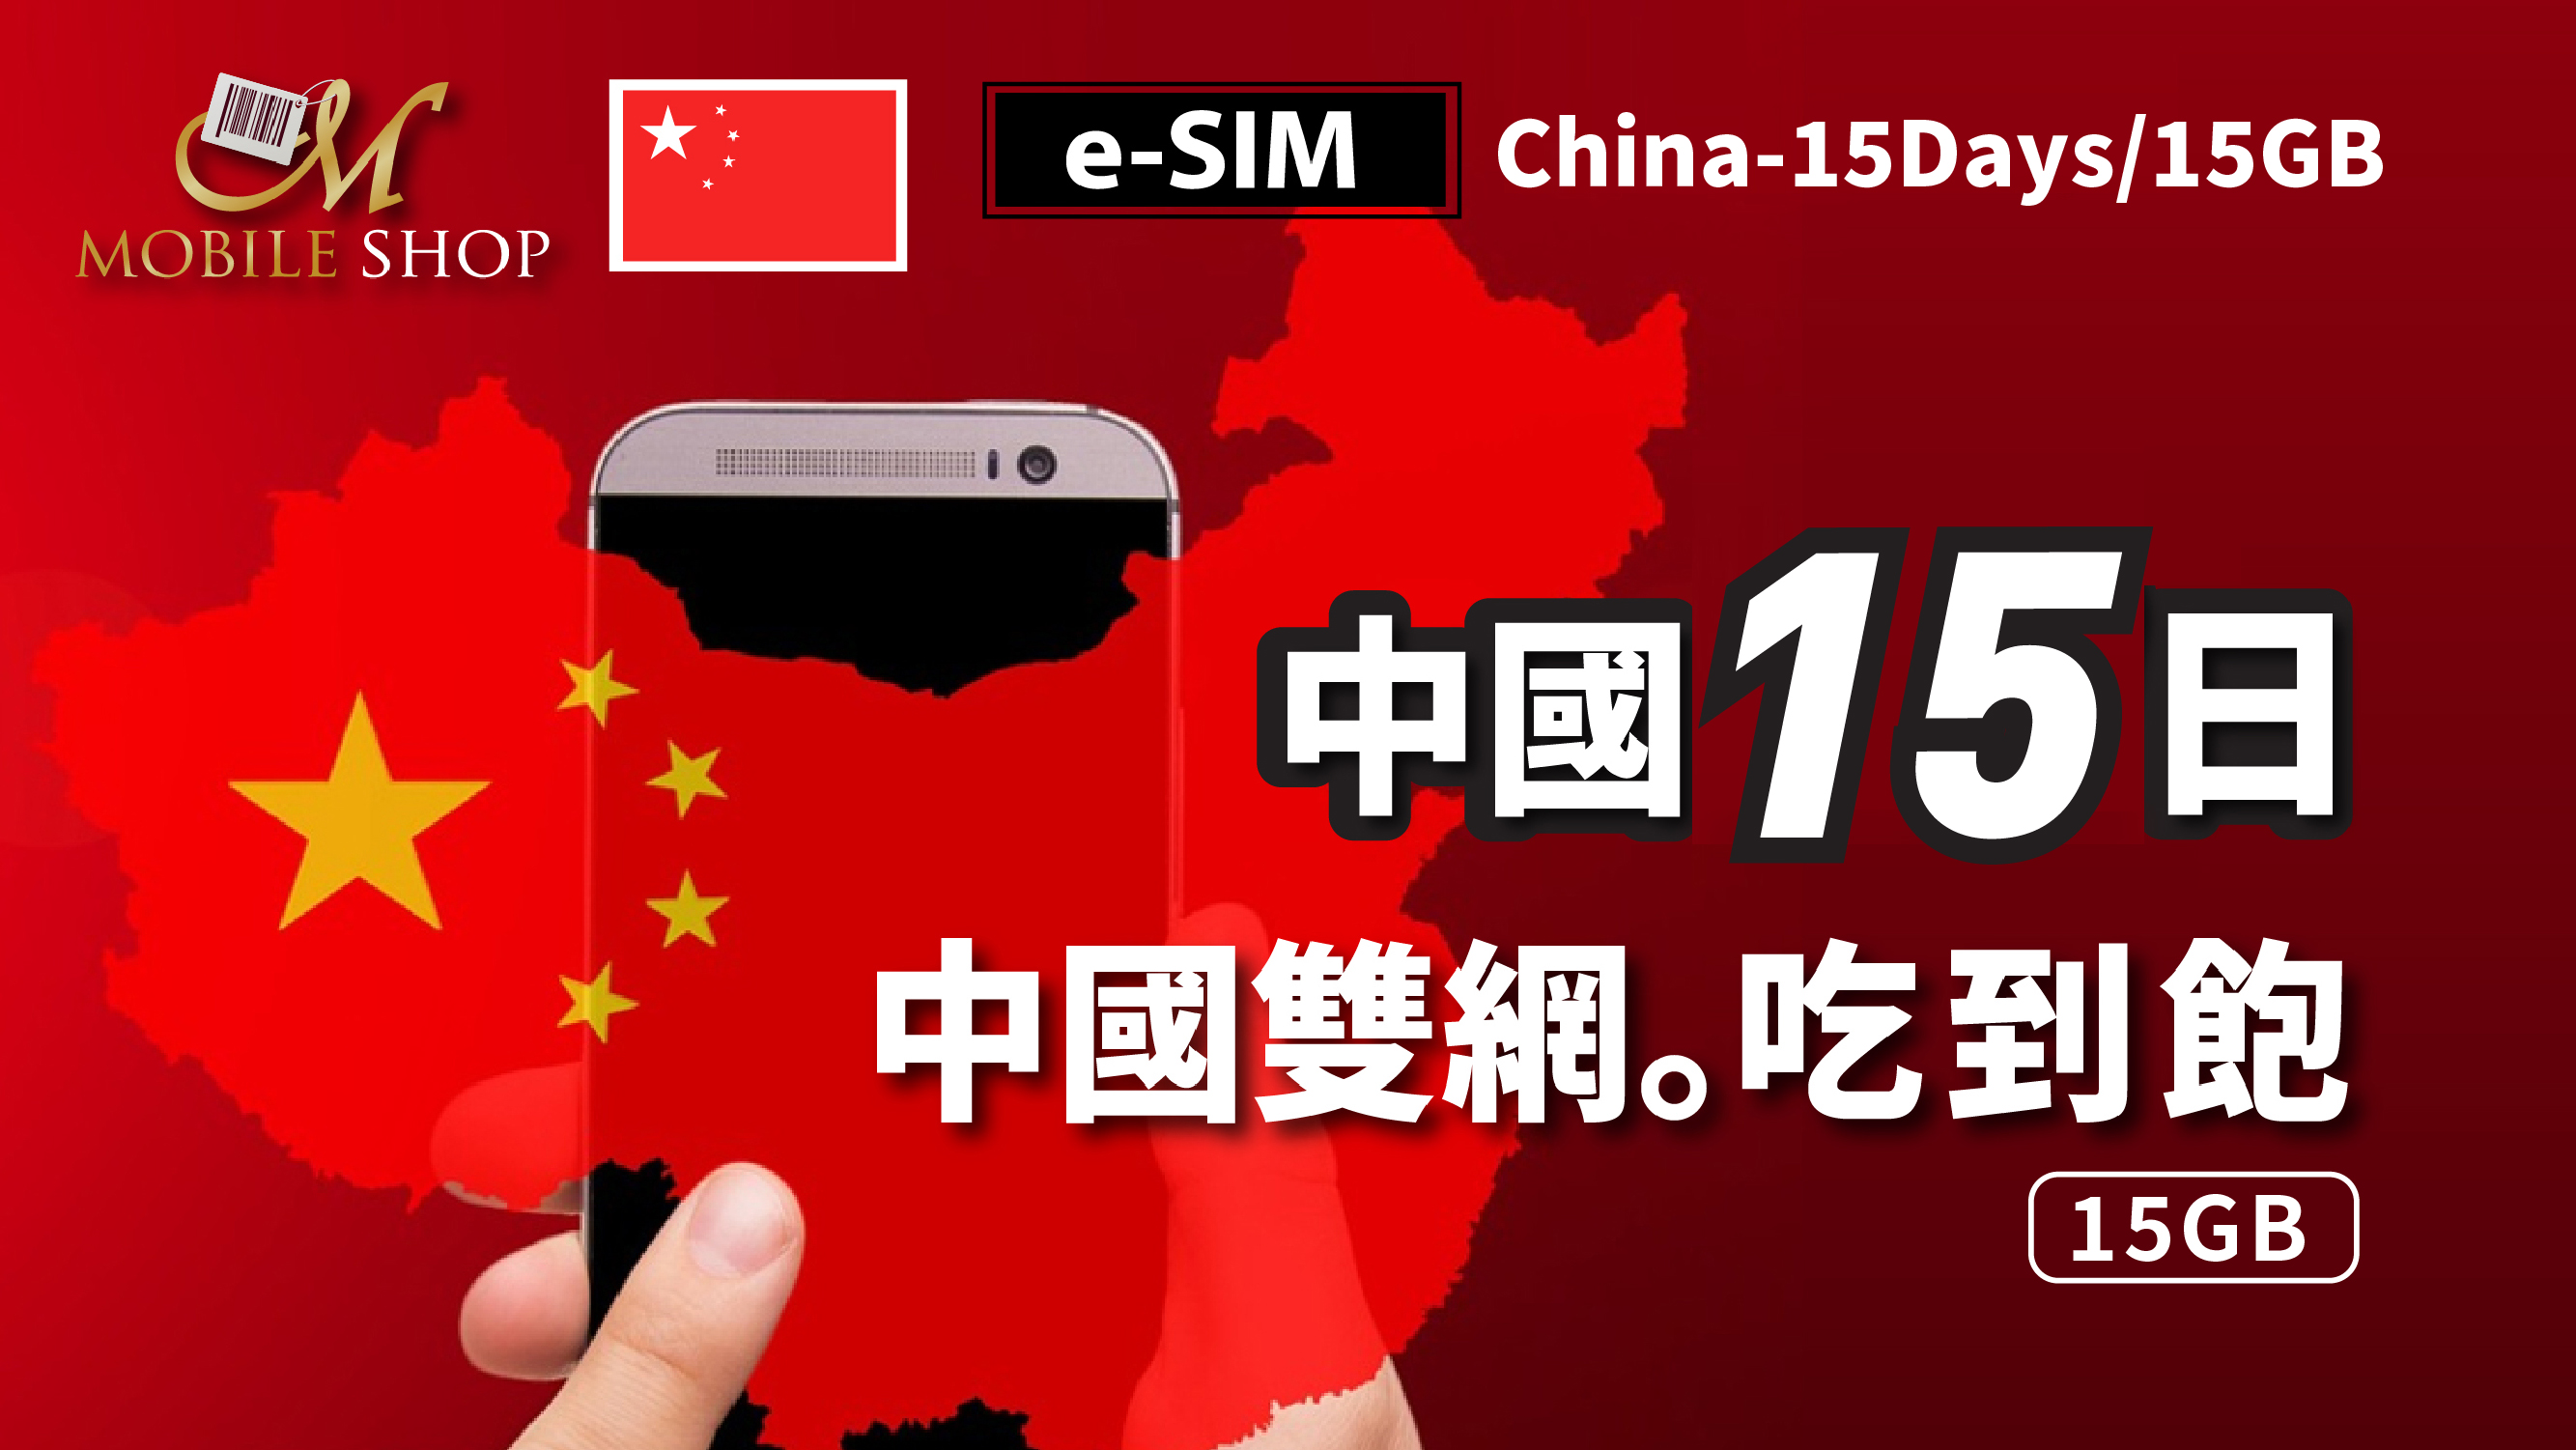 eSIM_China 15Days/15GB unlimited data